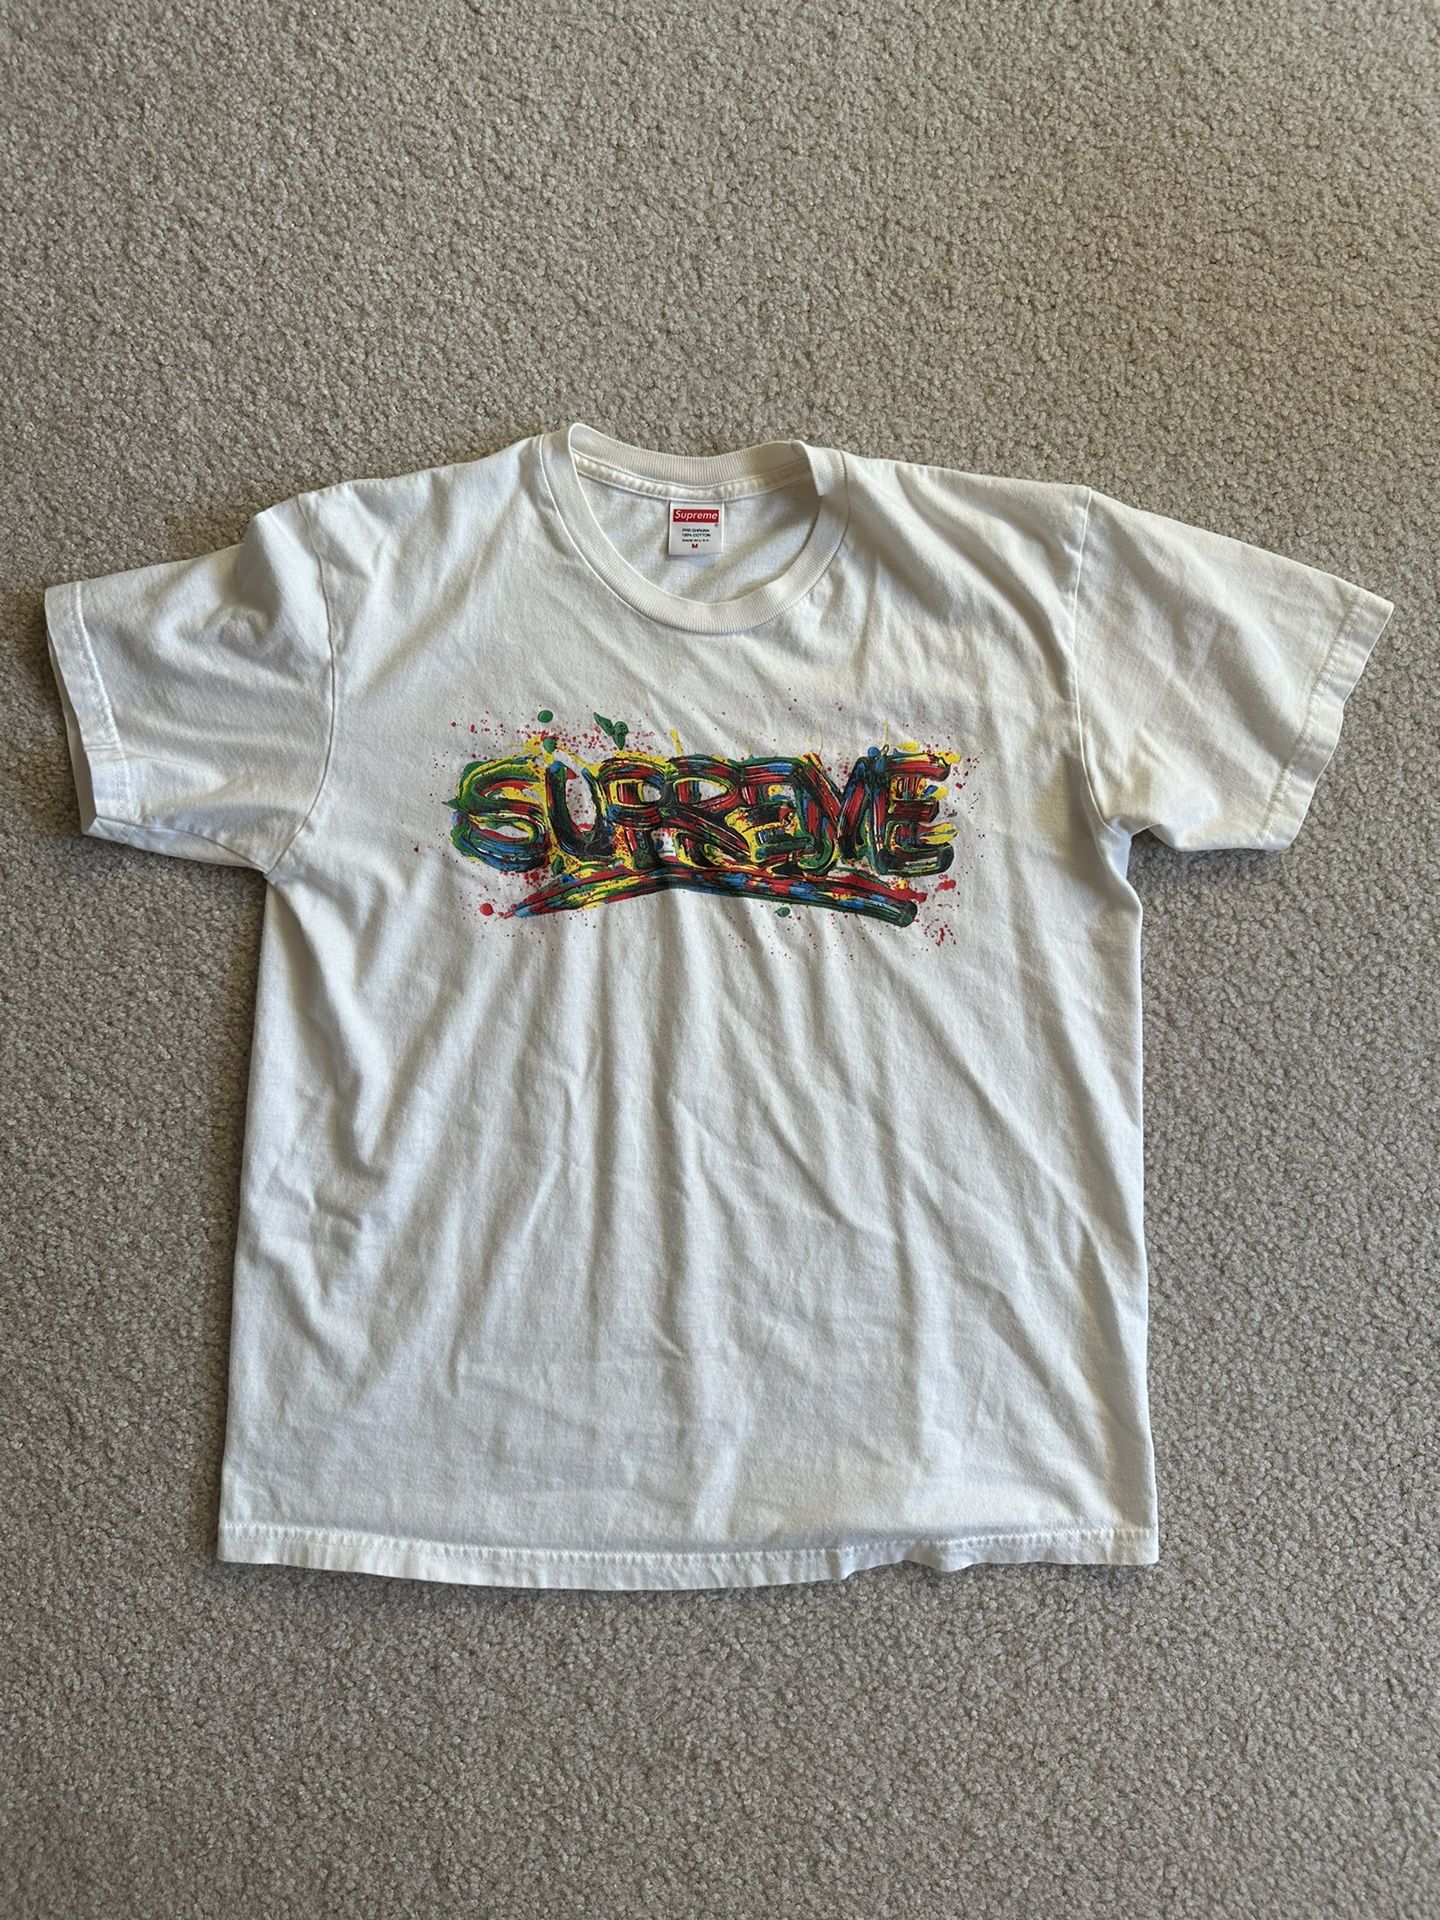 Supreme Paint Logo T Shirt White Size Medium